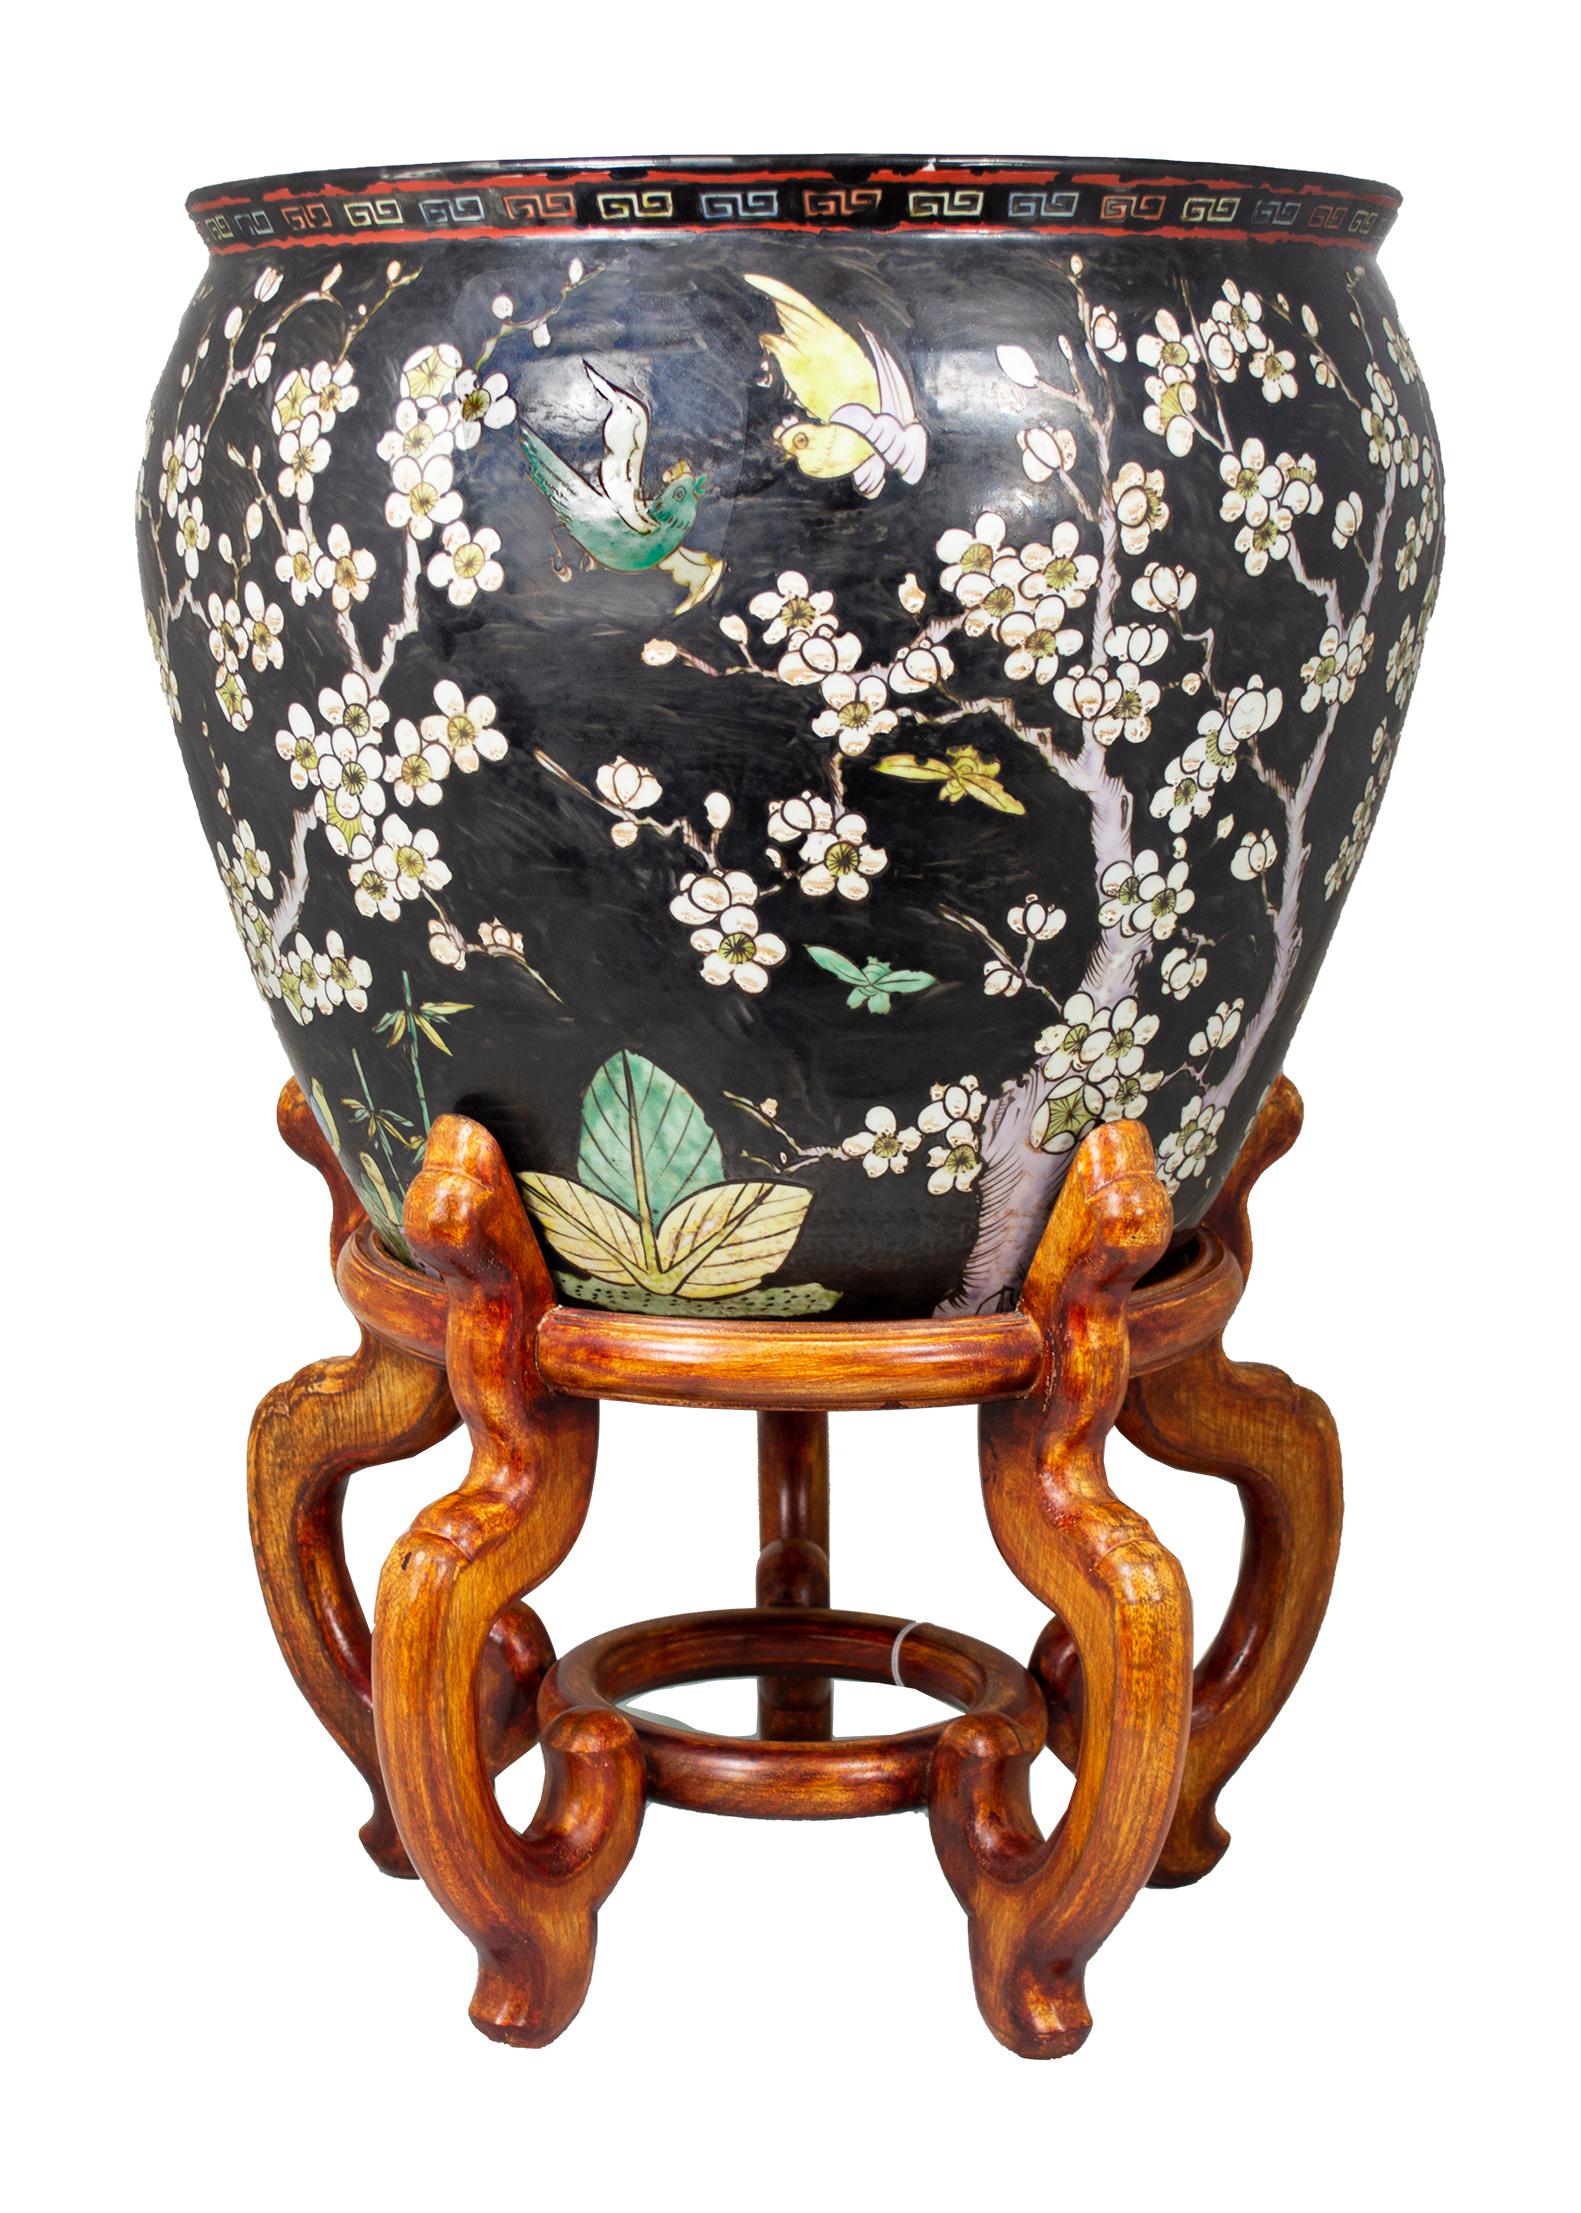 Cachepot in porcelain with famille noire enamel decorations Kangxi mark